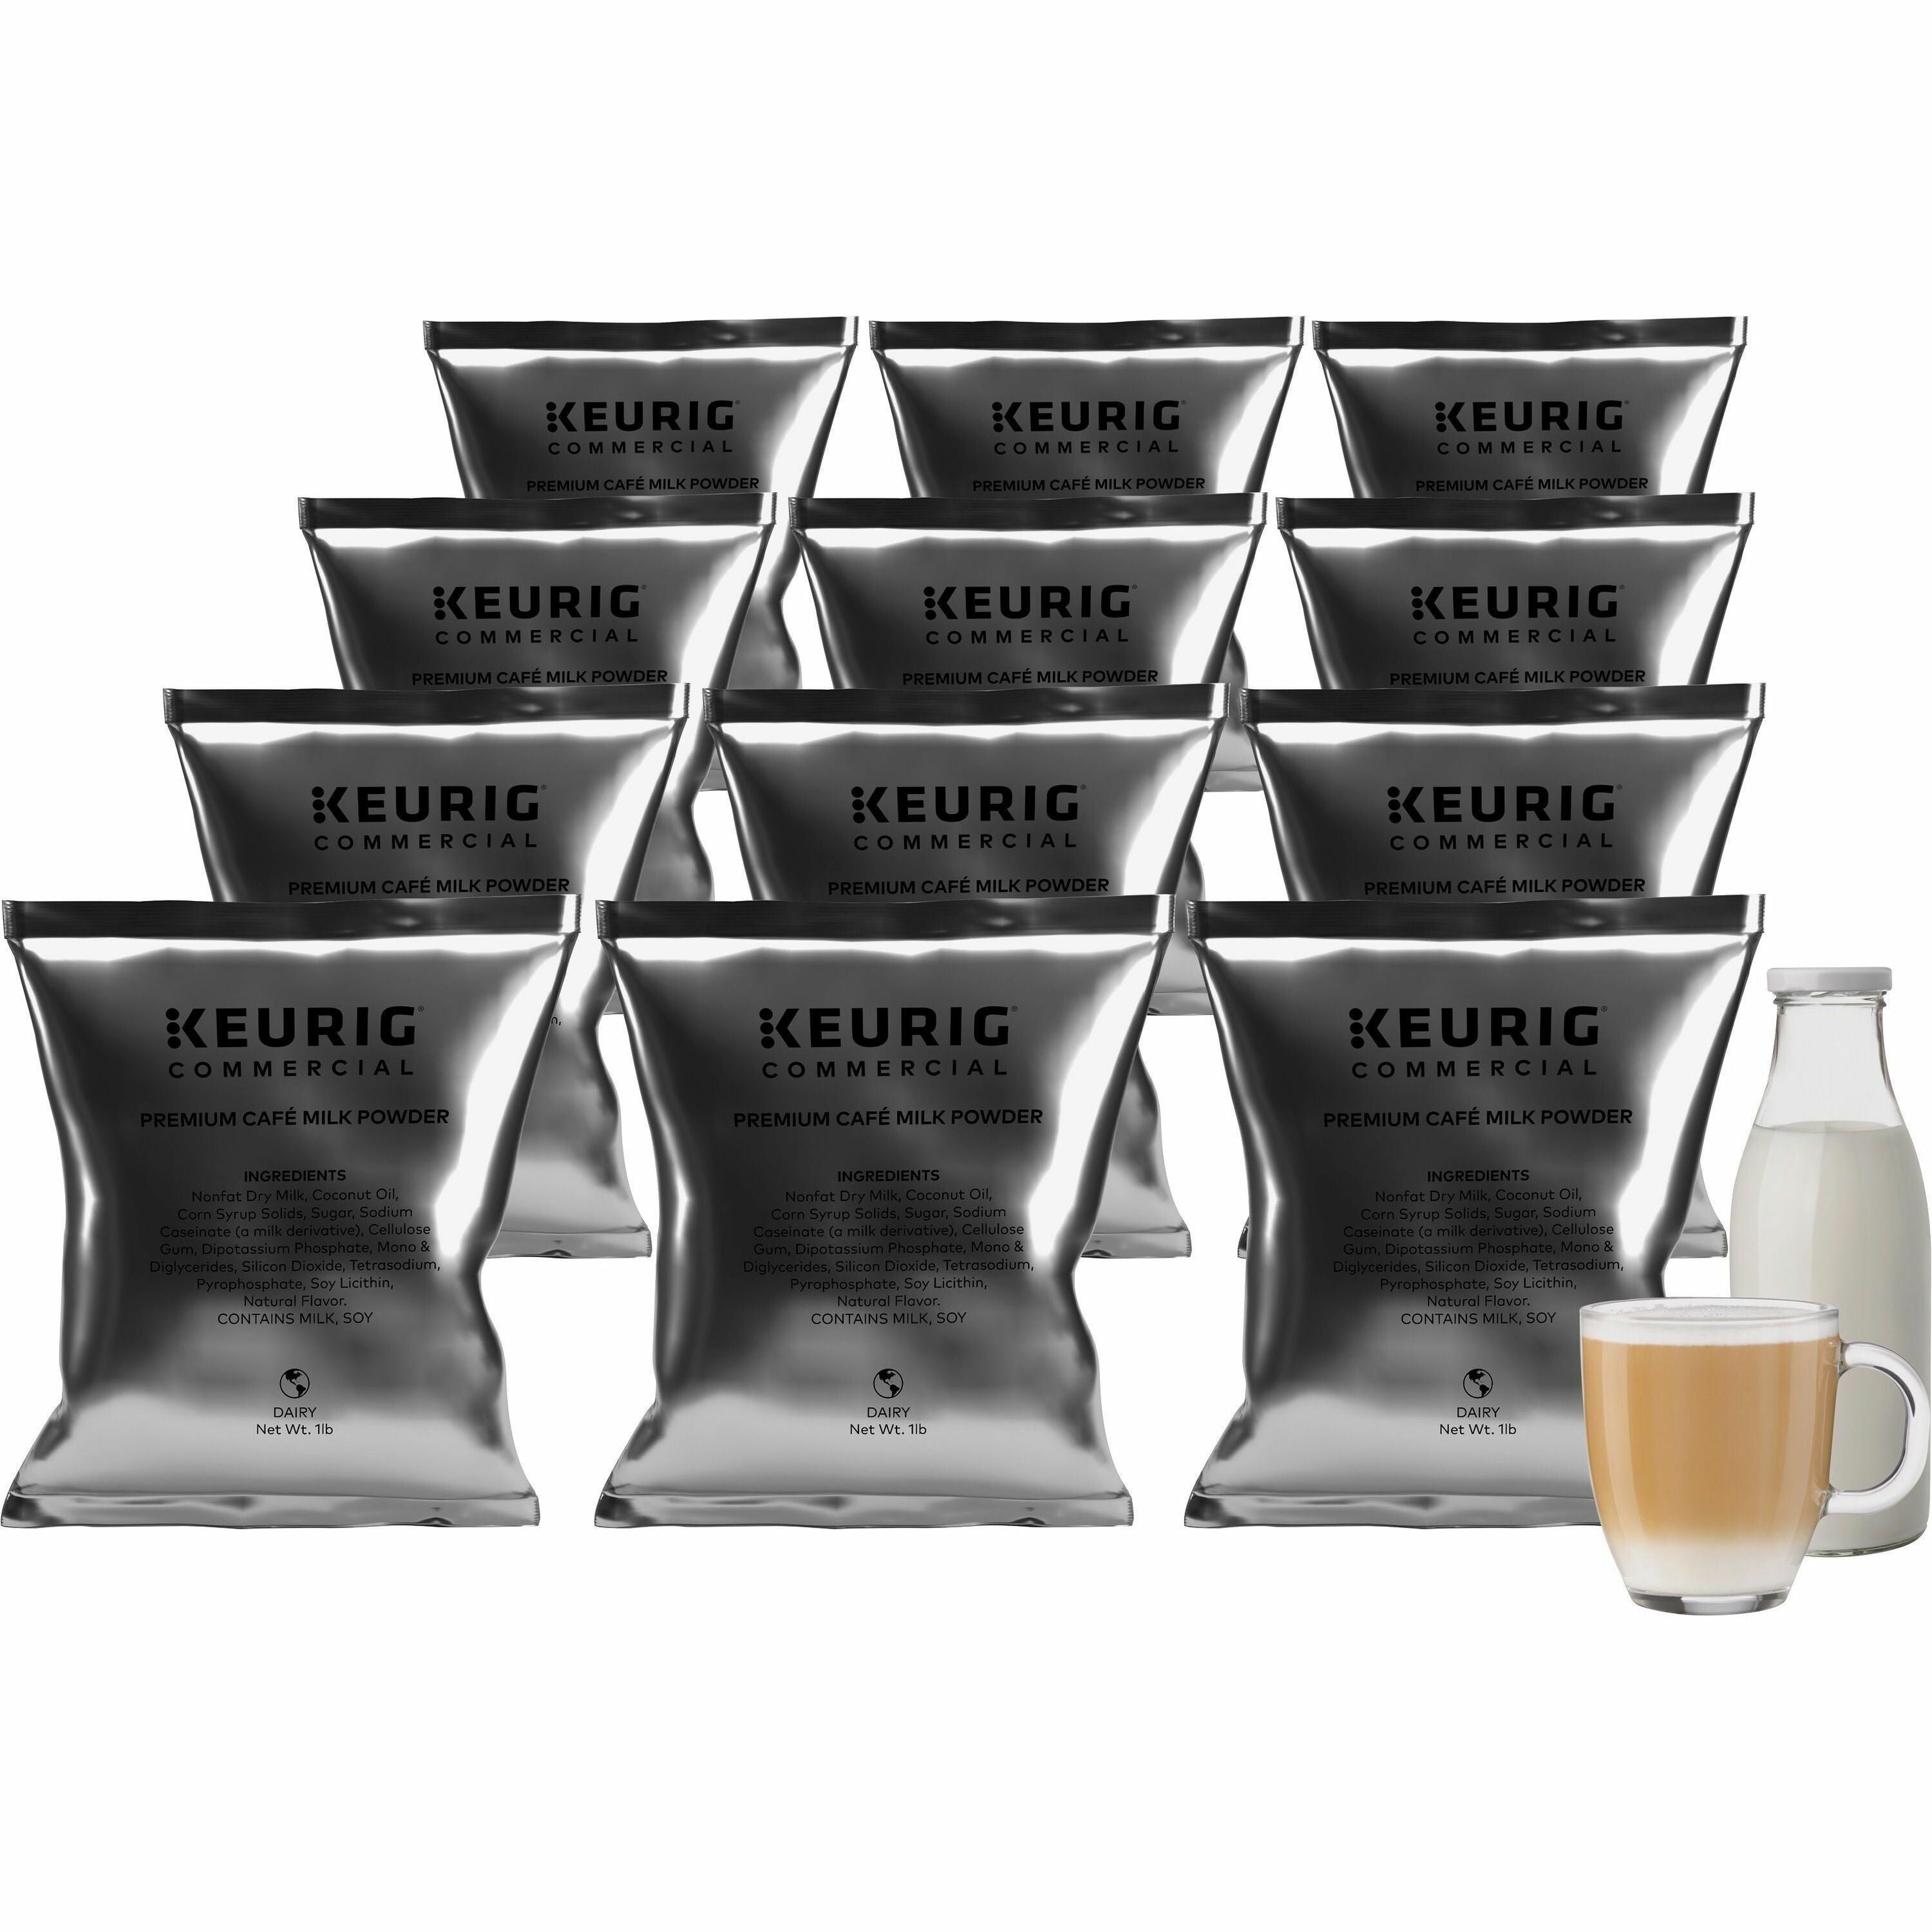 keurig-premium-cafe-milk-powder-1-lb-16-oz-12-carton_gmt9795 - 1